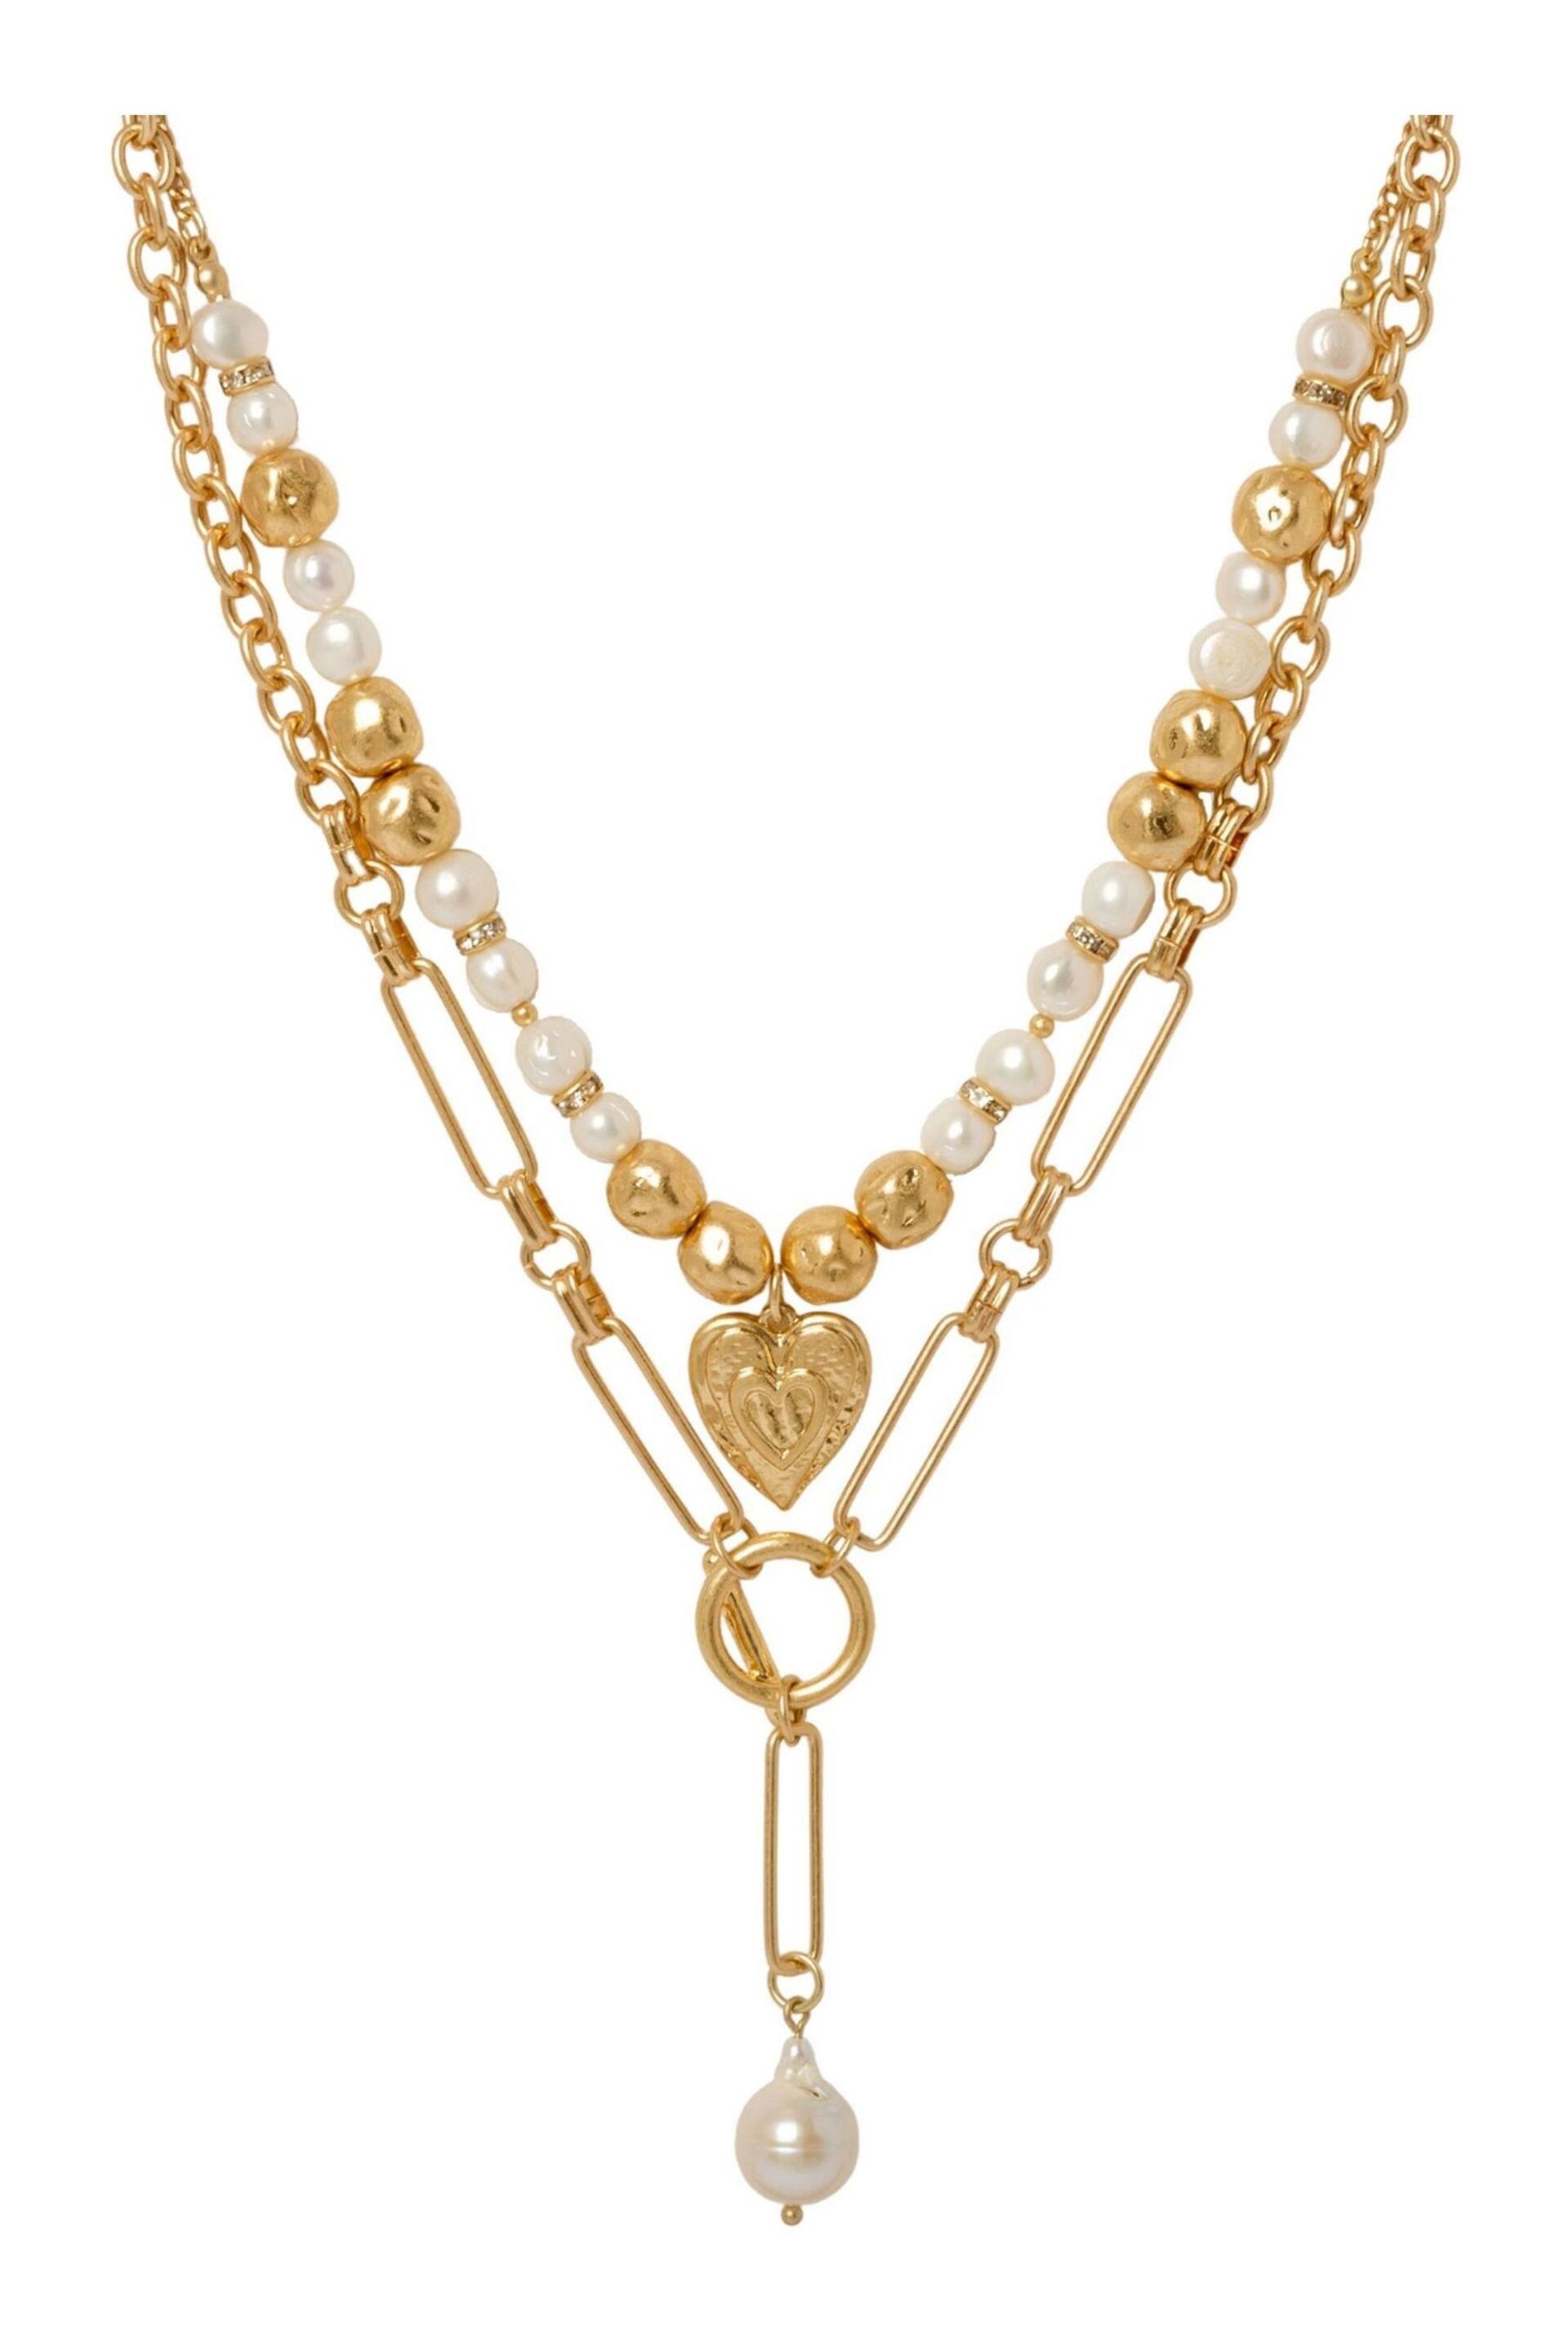 Bibi Bijoux Gold Pearl Elegance Real Pearl Layered Necklace Set - Image 2 of 4